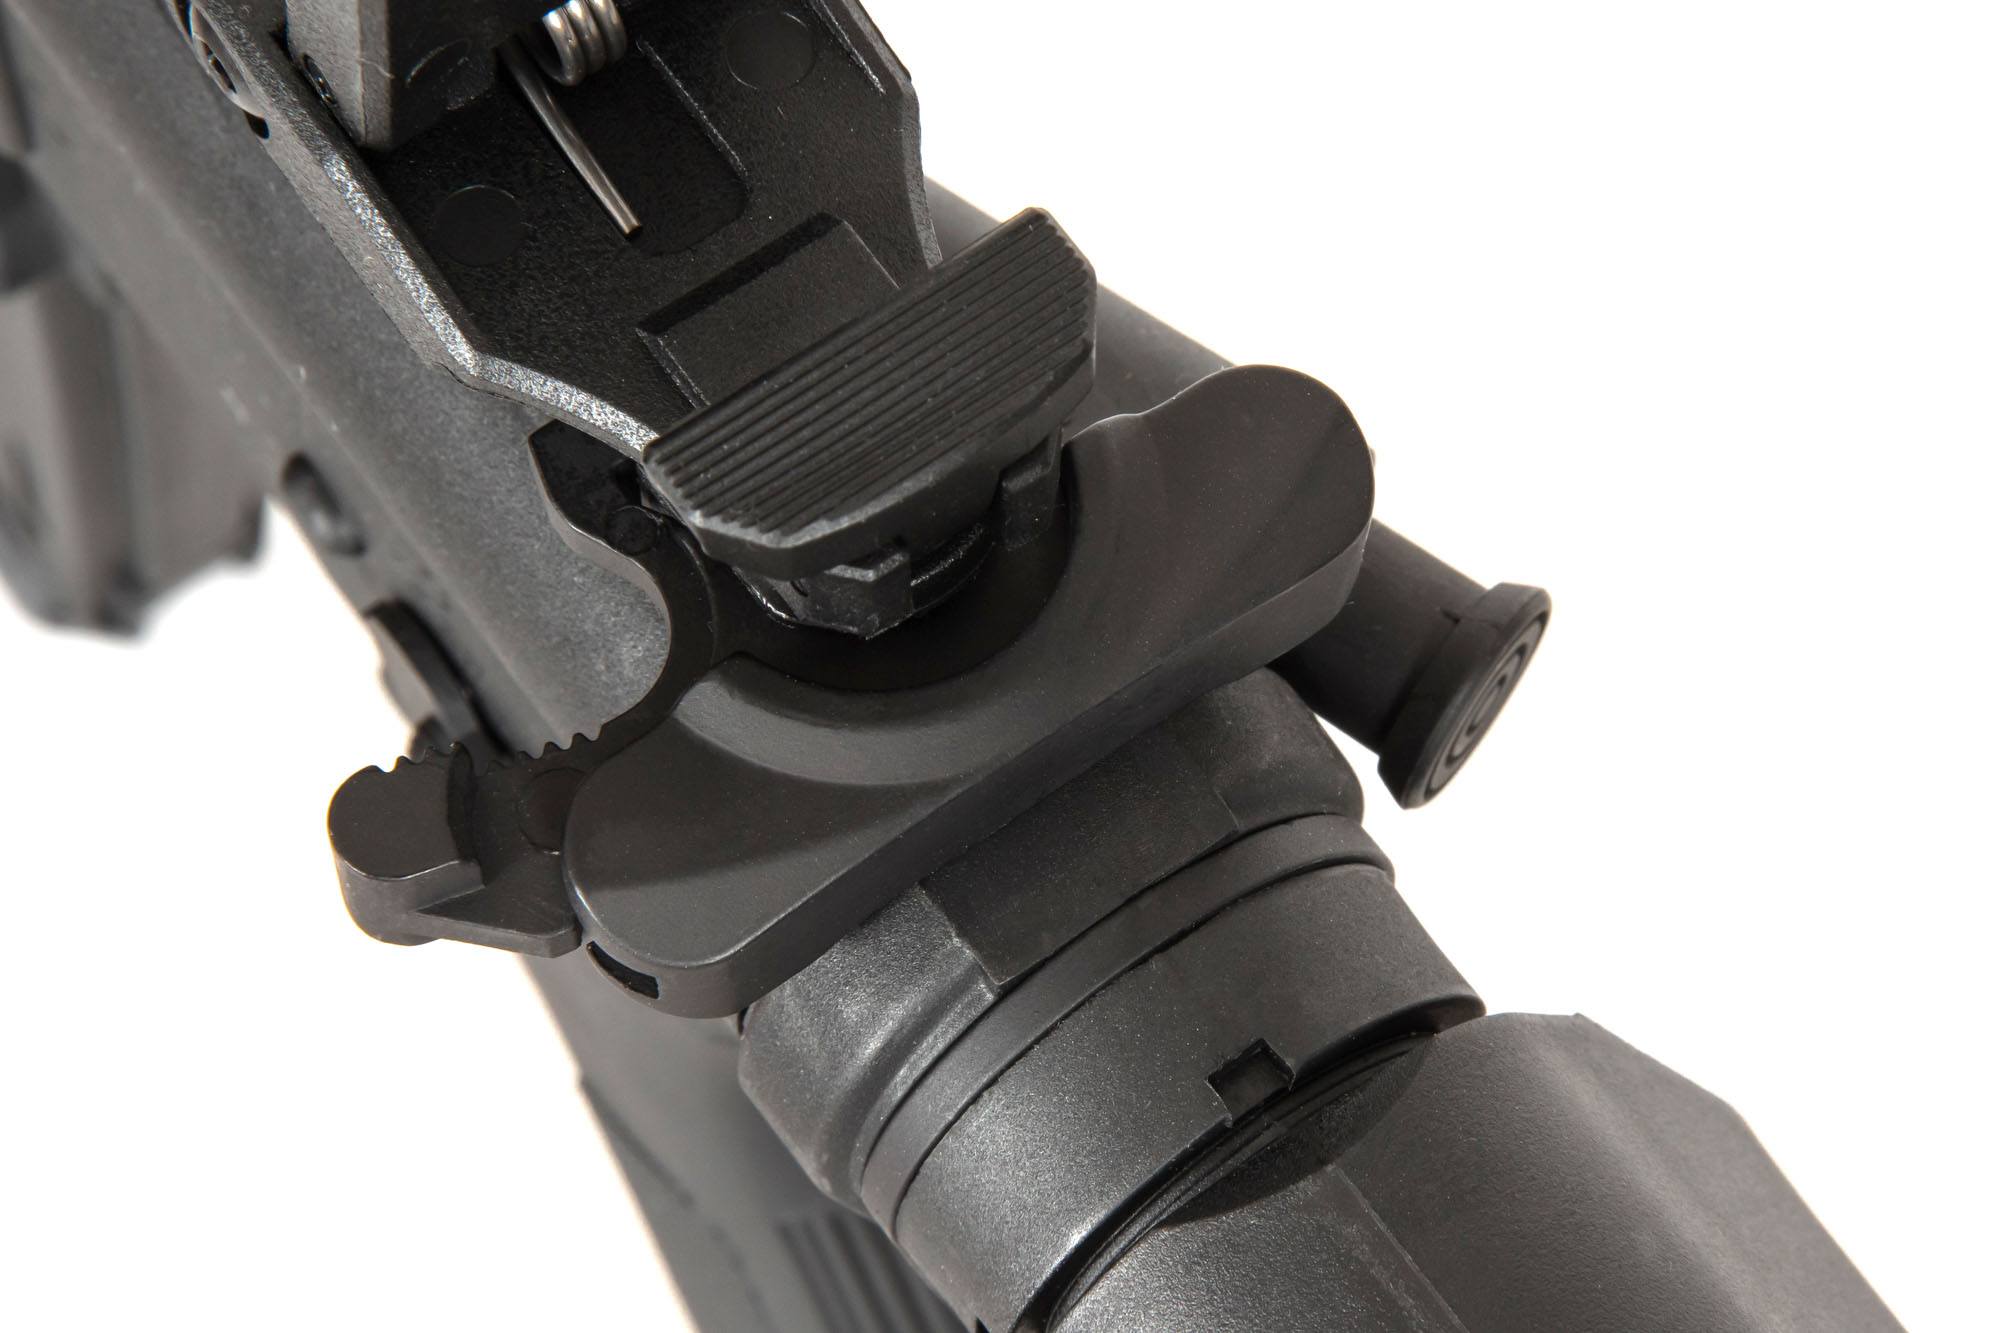 SA-22 X-CORE ™ ASR ™ Carbine Replica - Black by Specna Arms on Airsoft Mania Europe